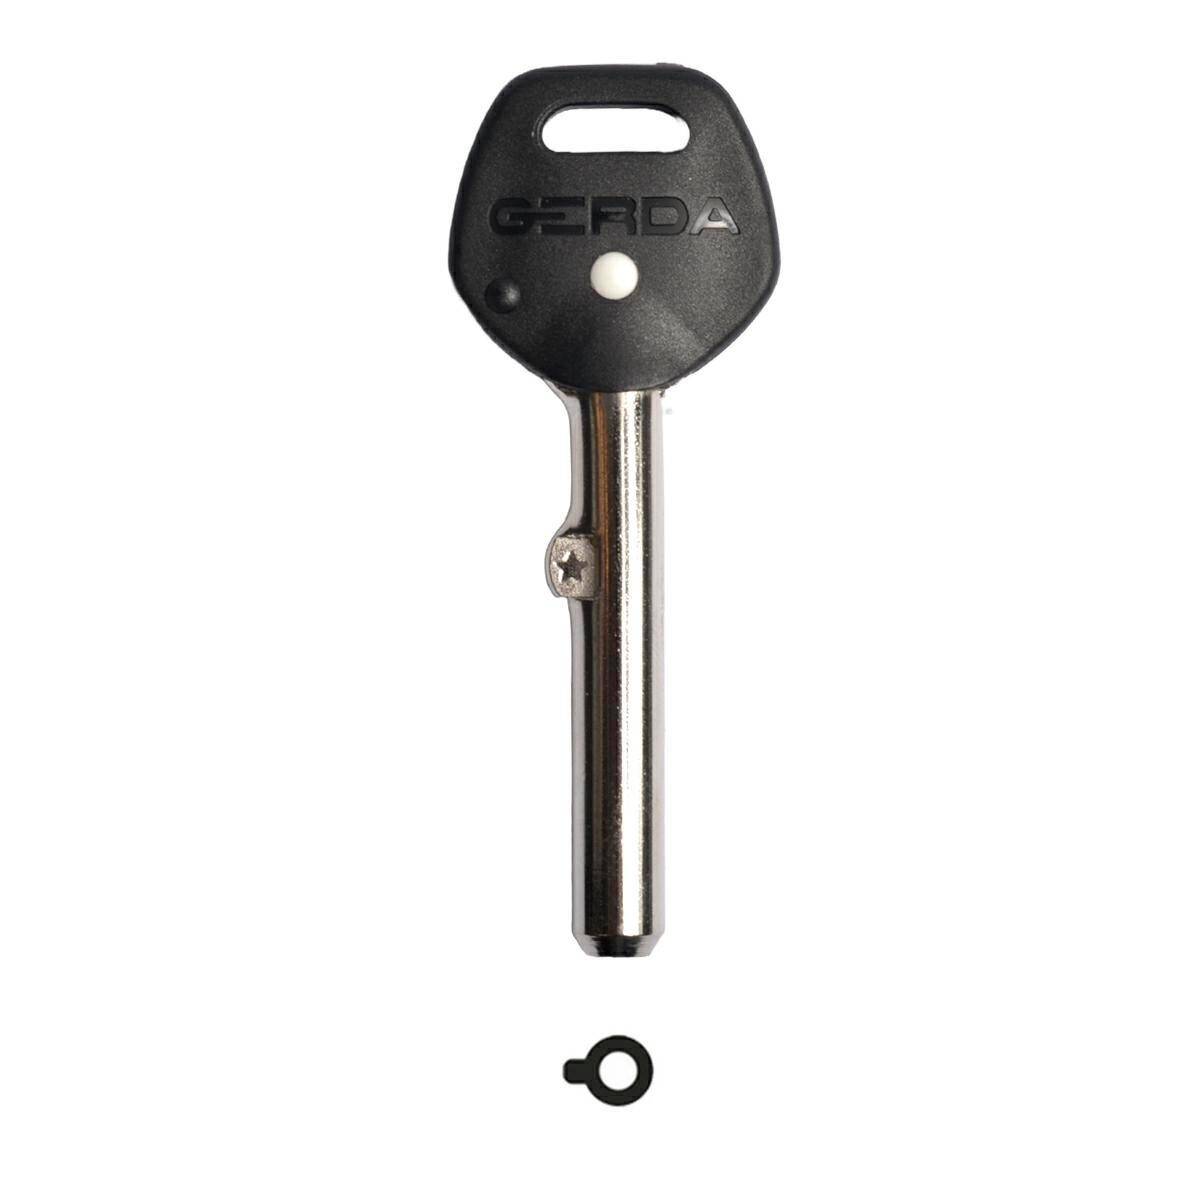 Gerda GT2 key to RM1000 inserts